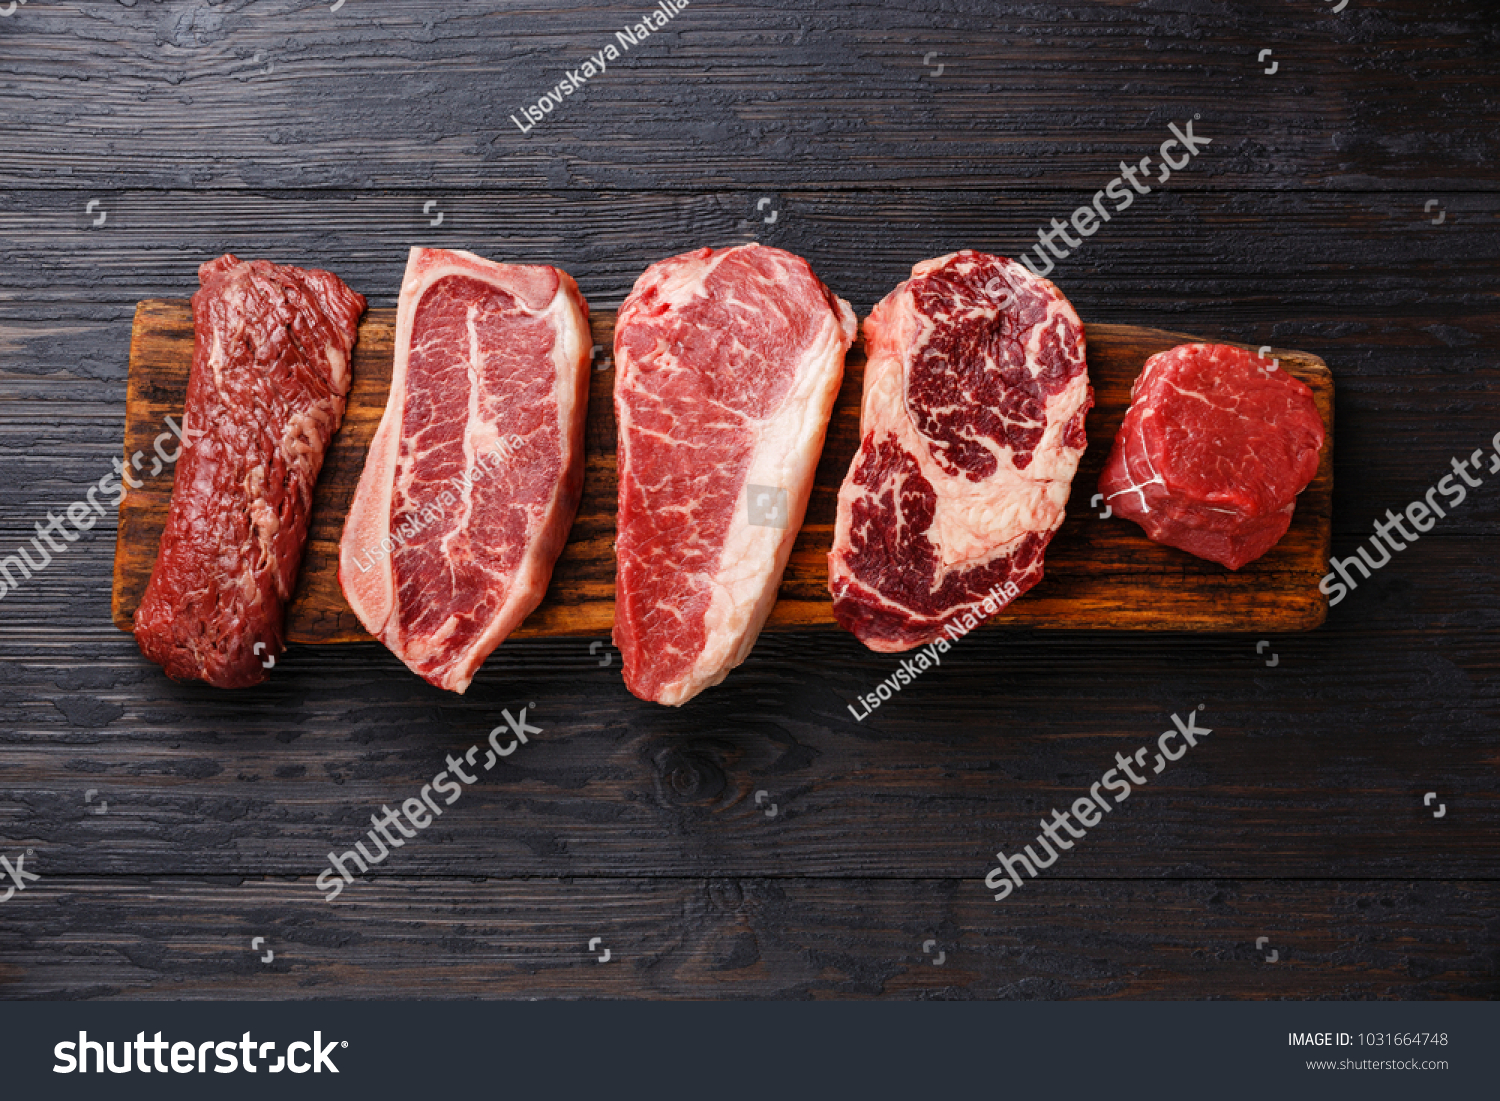 Variety of Raw Black Angus Prime meat steaks Machete, Blade on bone, Striploin, Rib eye, Tenderloin fillet mignon on wooden board copy space #1031664748